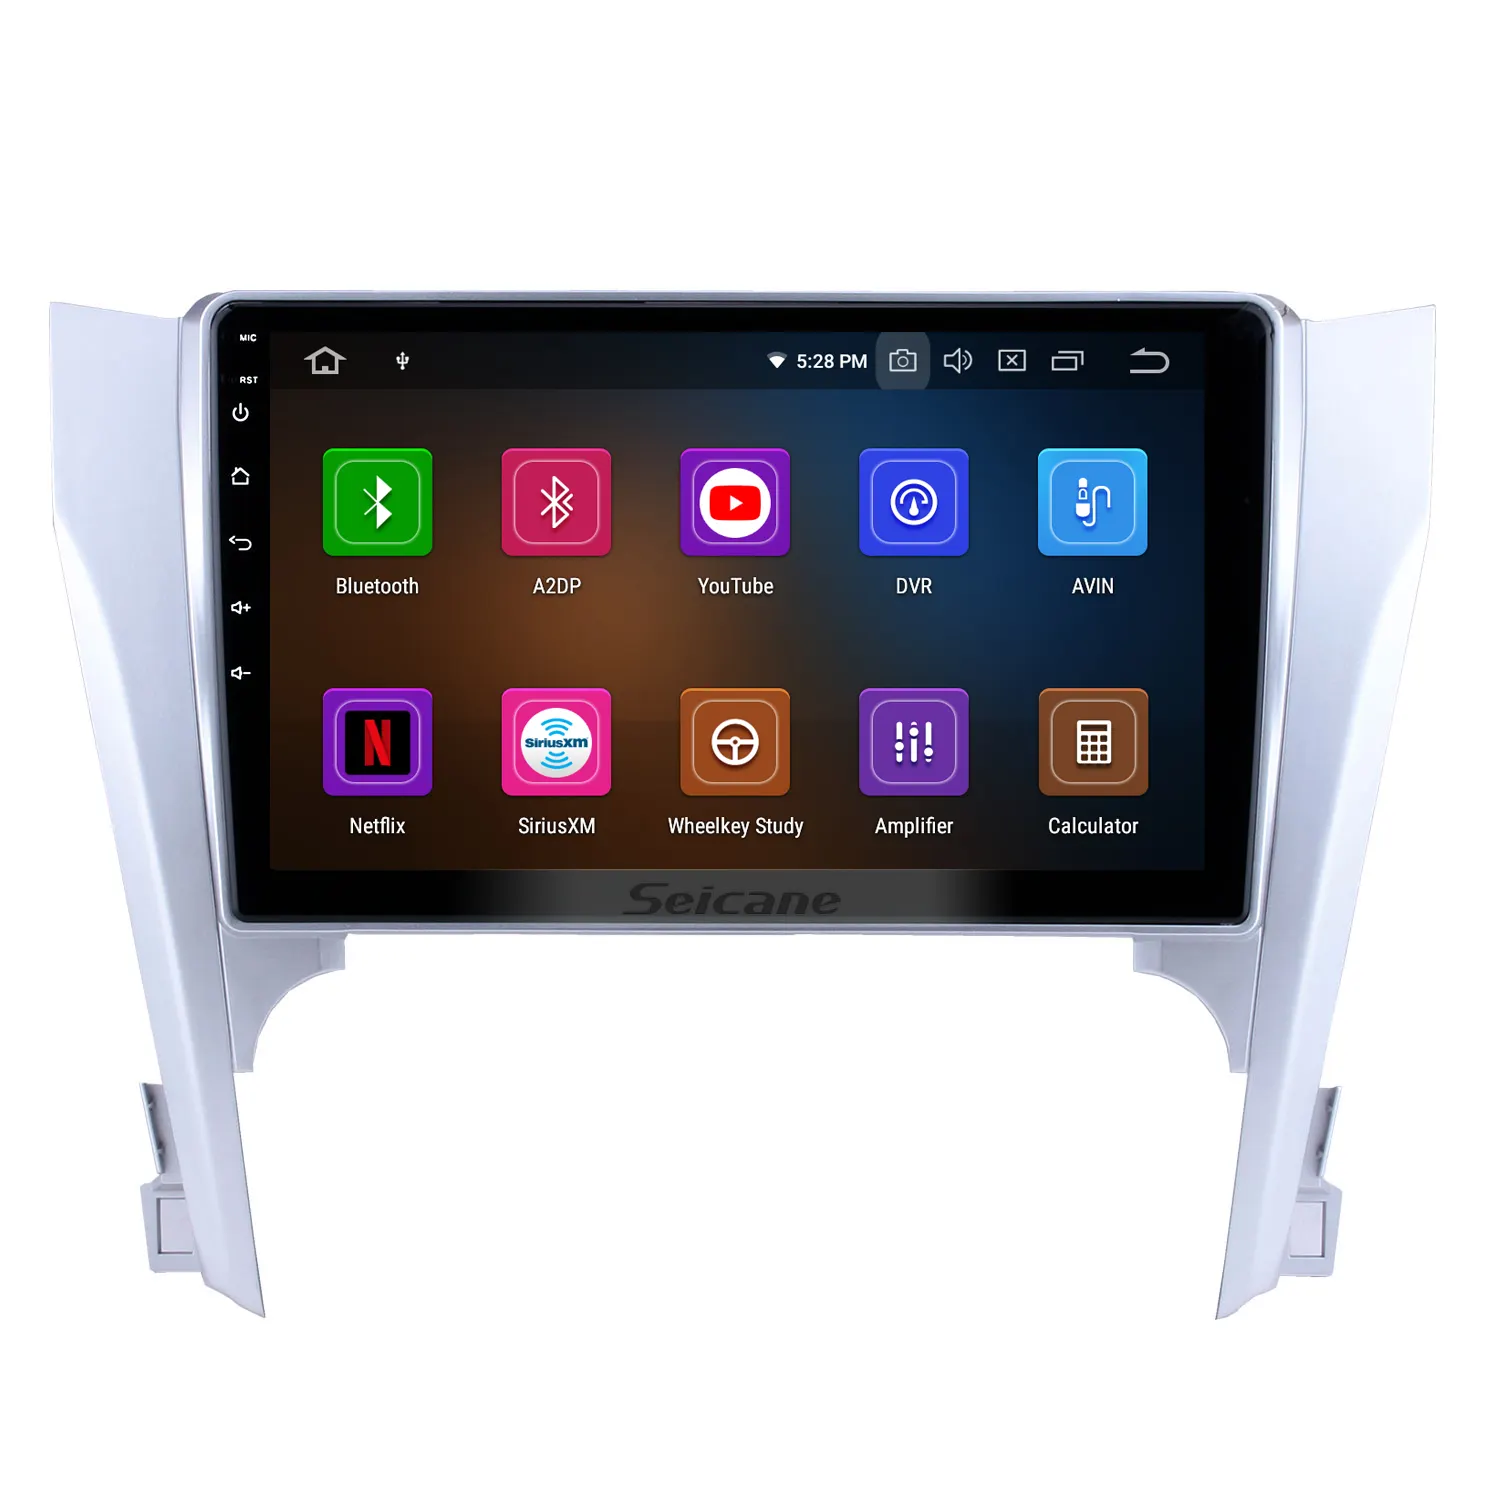 10.1 inç Android 11.0 dokunmatik ekran otomobil radyosu Toyota CAMRY 2012 2013 2014 2015 kafa ünitesi ile TV USB WiFi OBD2